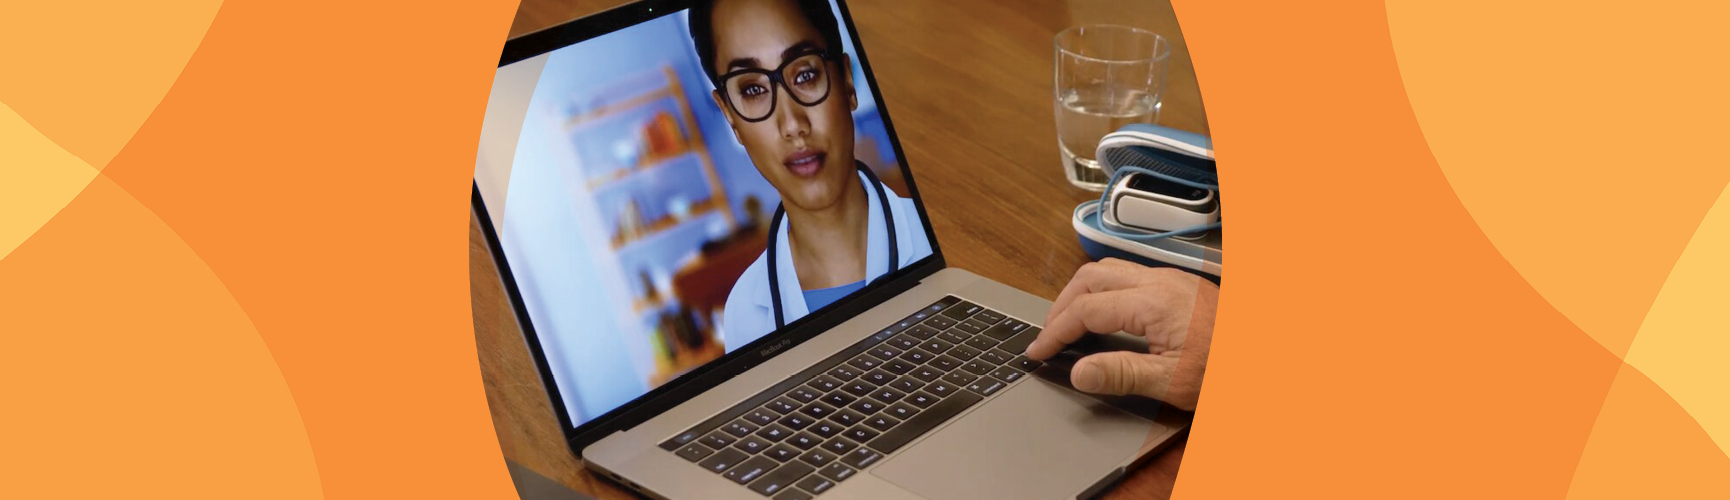 An artificial human is shown on a laptop screen.